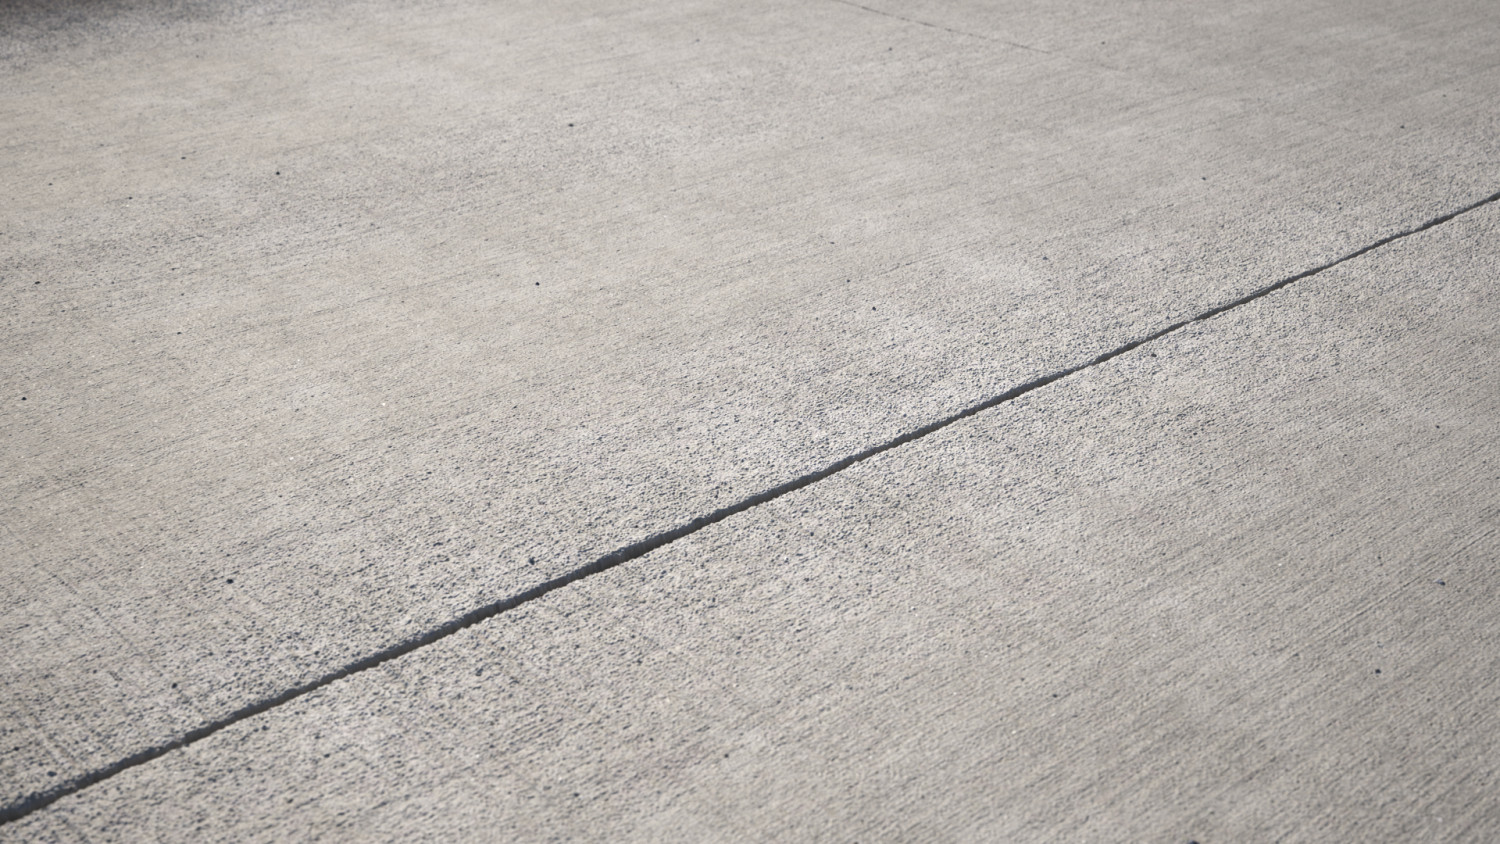 Textured concrete road texture